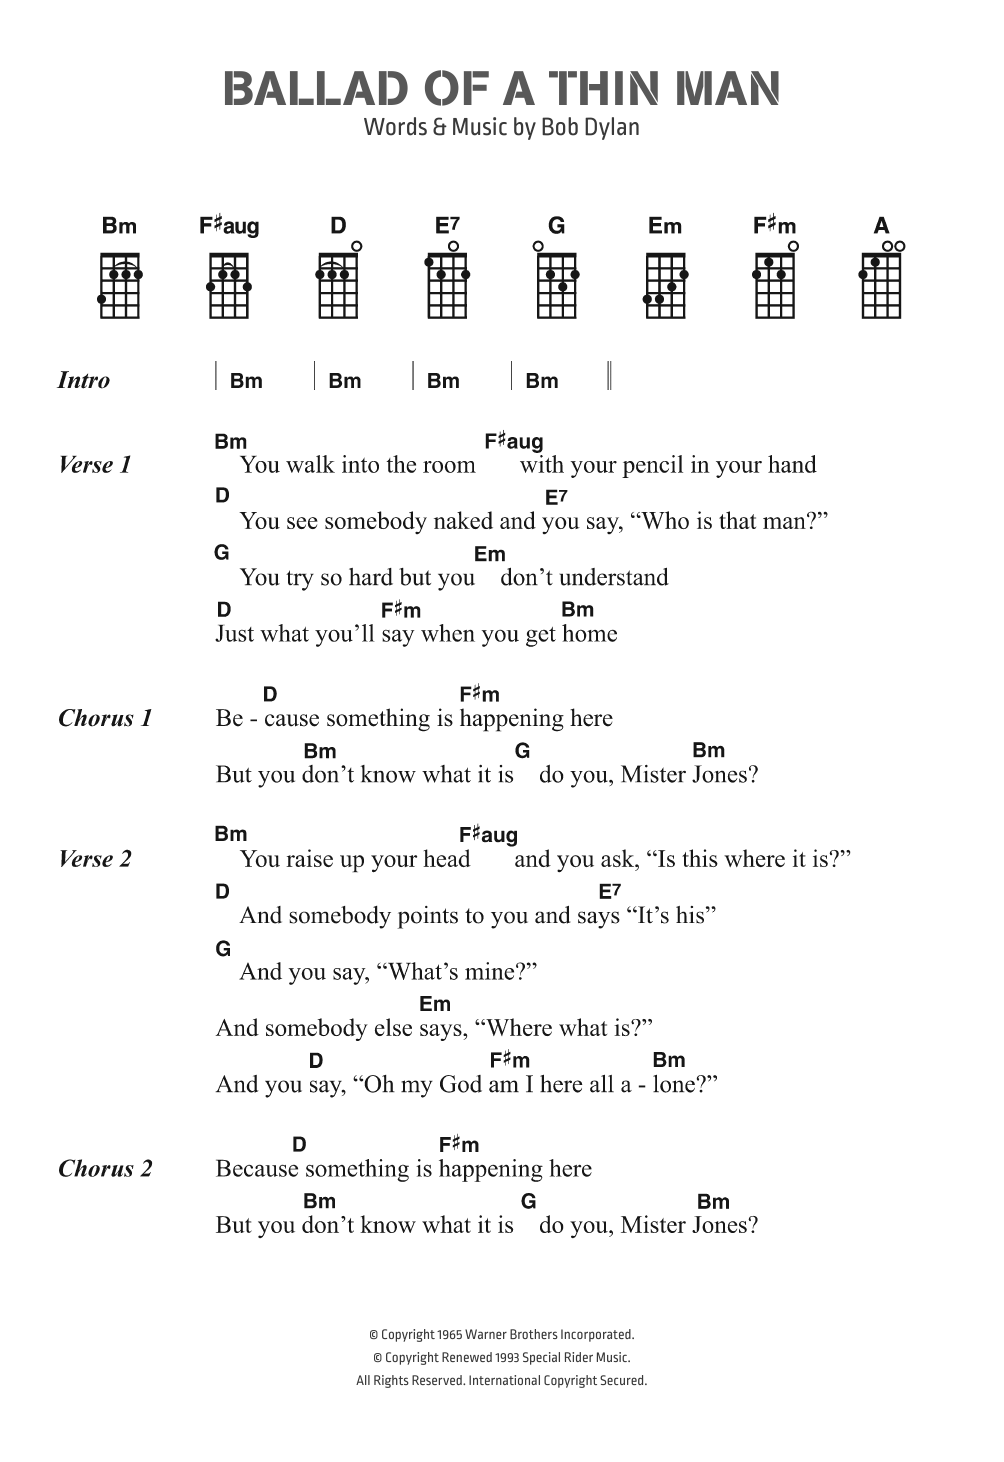 Bob Dylan Ballad Of A Thin Man Sheet Music Notes & Chords for Ukulele Lyrics & Chords - Download or Print PDF